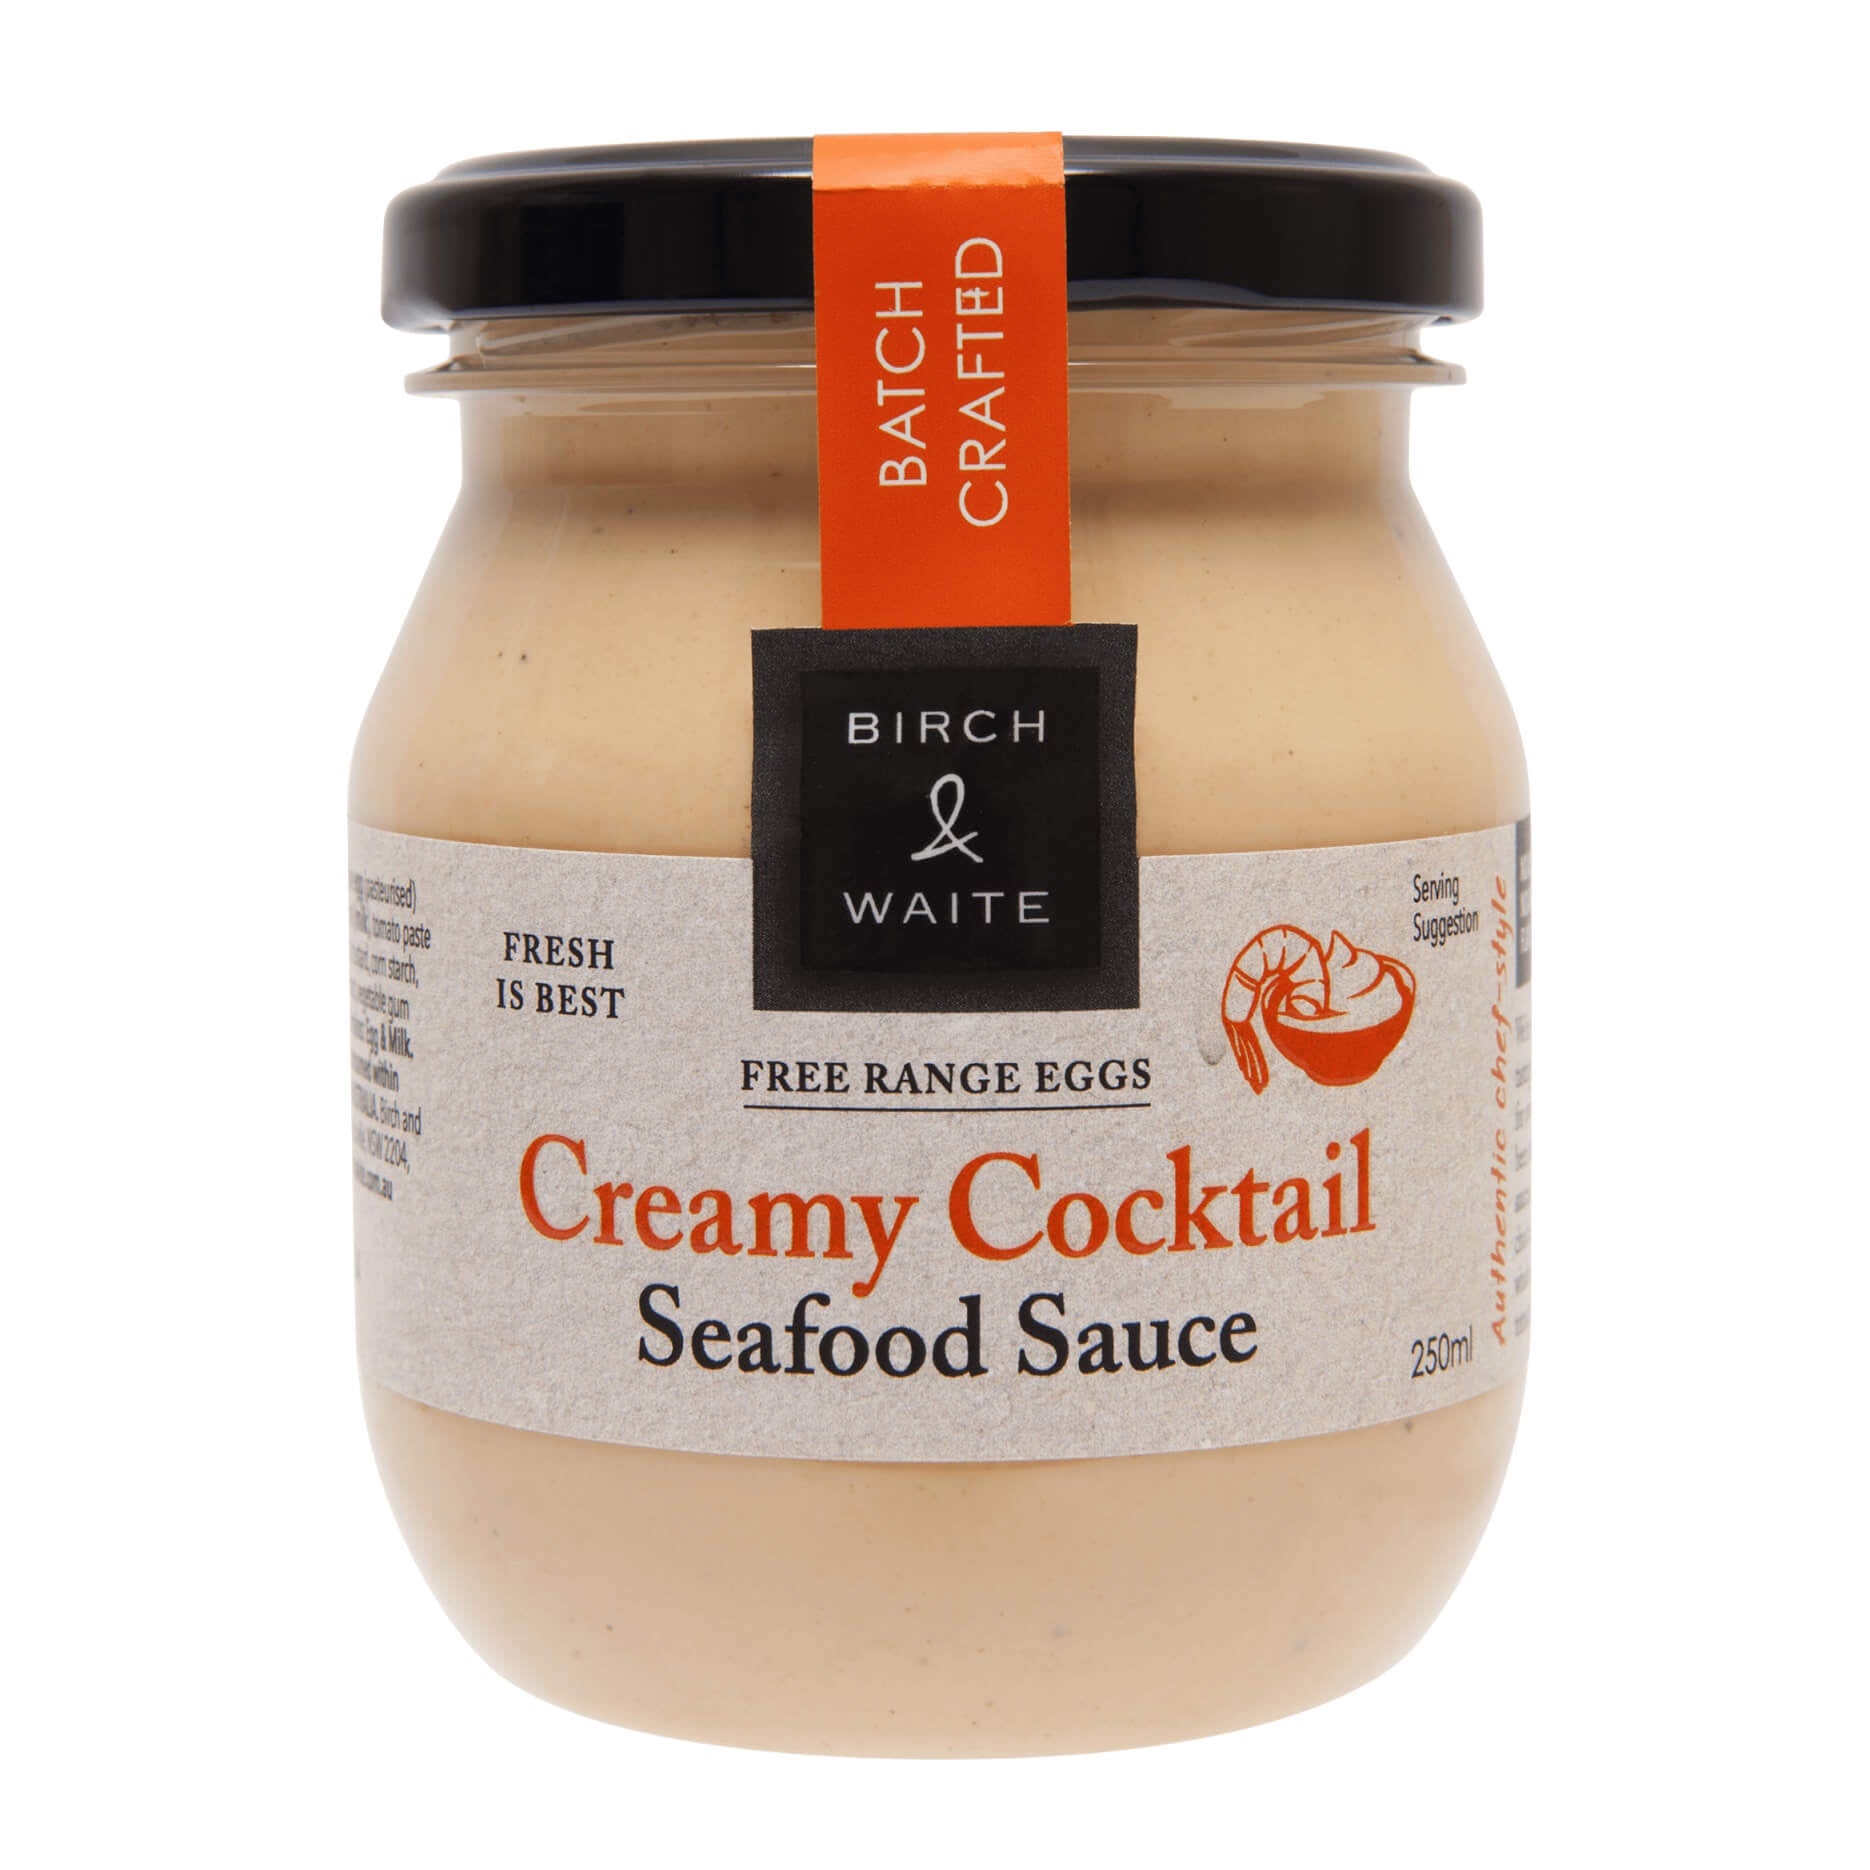 Birch & Waite Creamy Cocktail Seafood Sauce 250ml